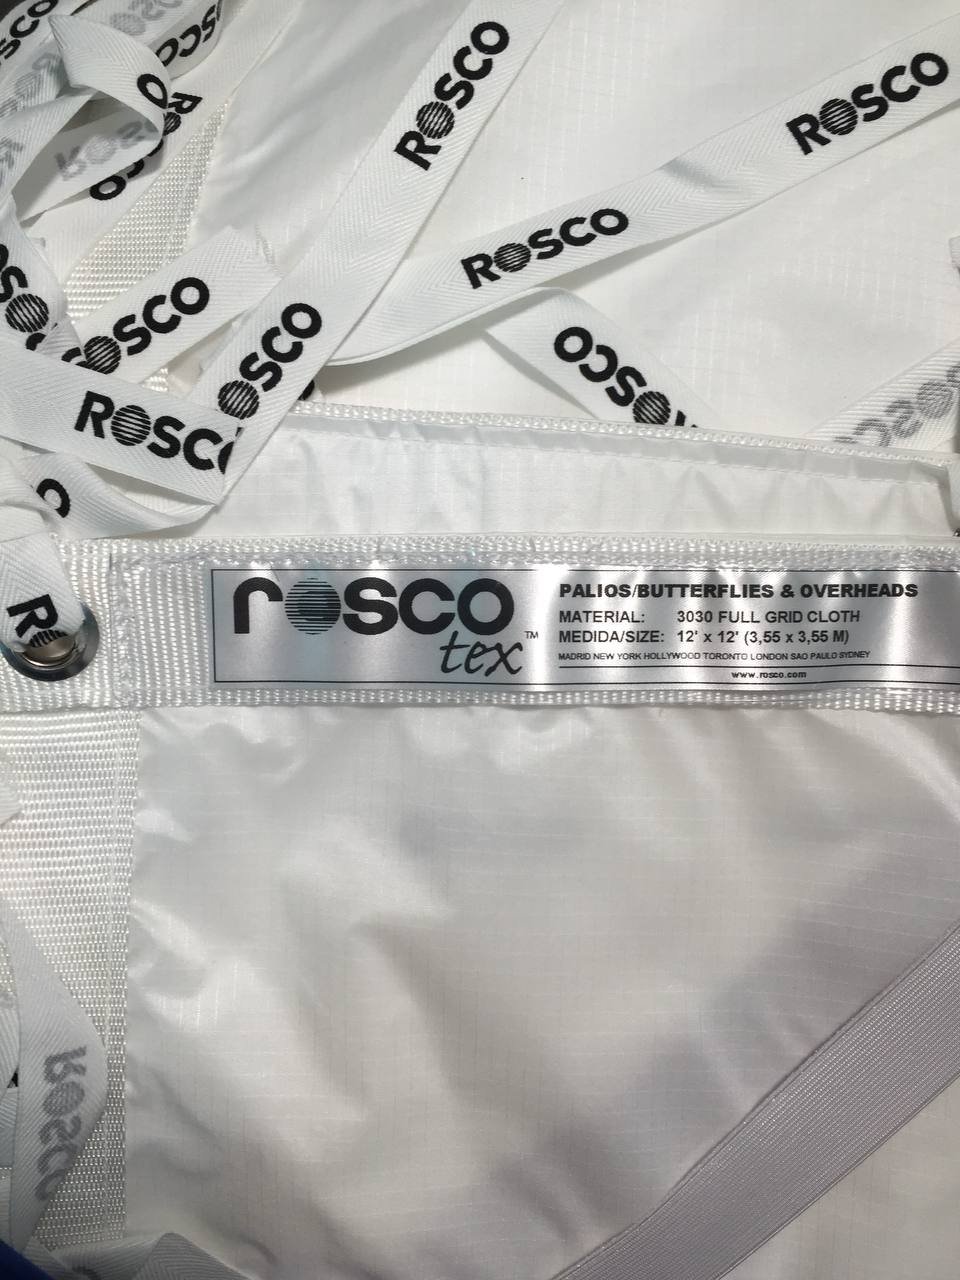 Розсіювач Rosco BUTTERFLY 3030 GRID CLOTH Full 3,55X3,55 M.(12'X12')